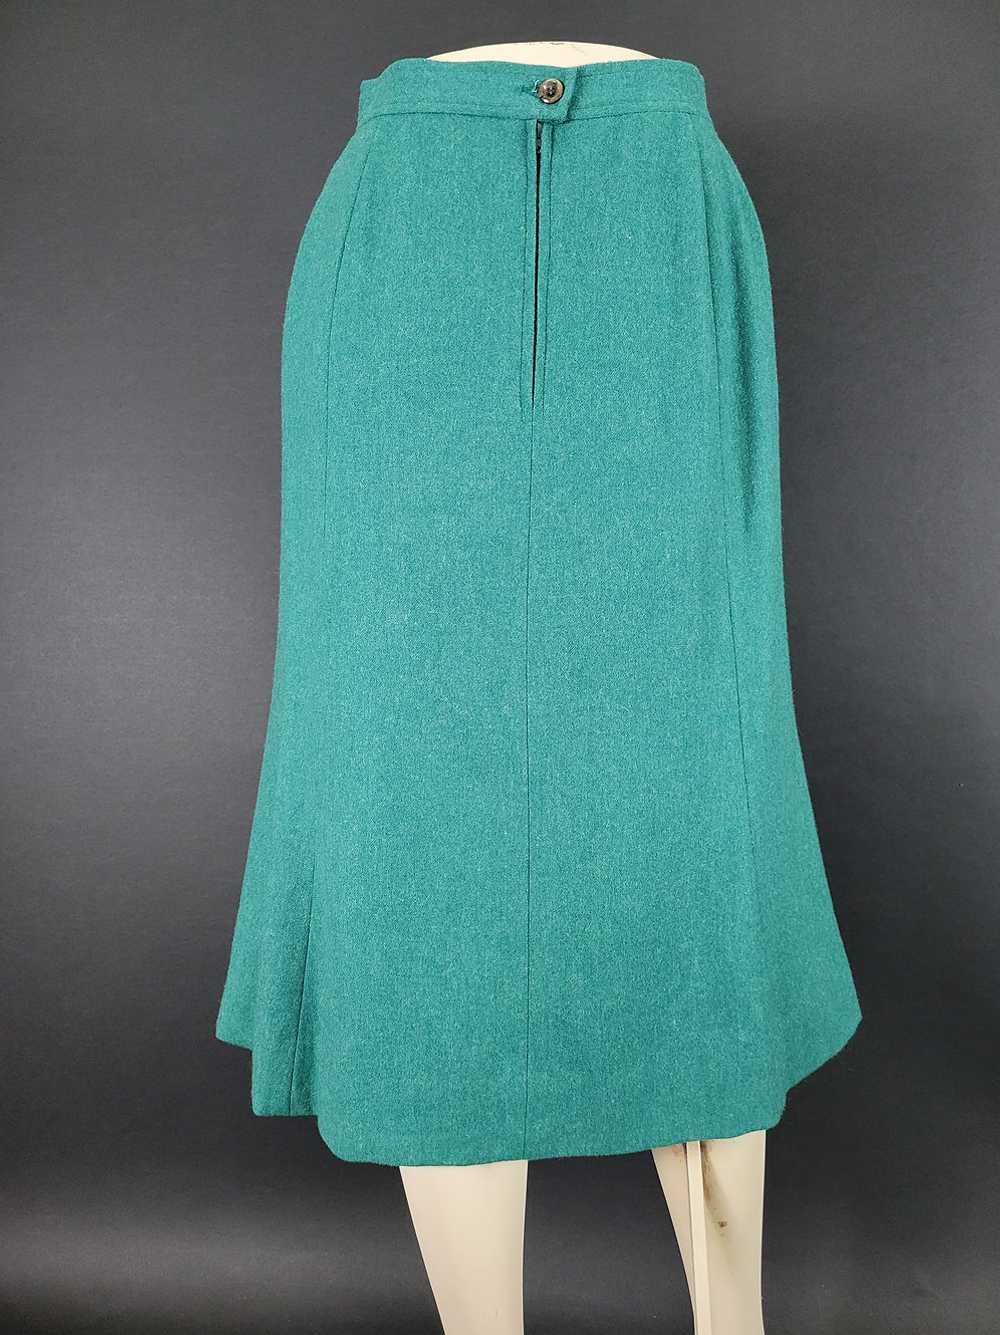 70s Young Pendleton Green Wool Skirt - image 8